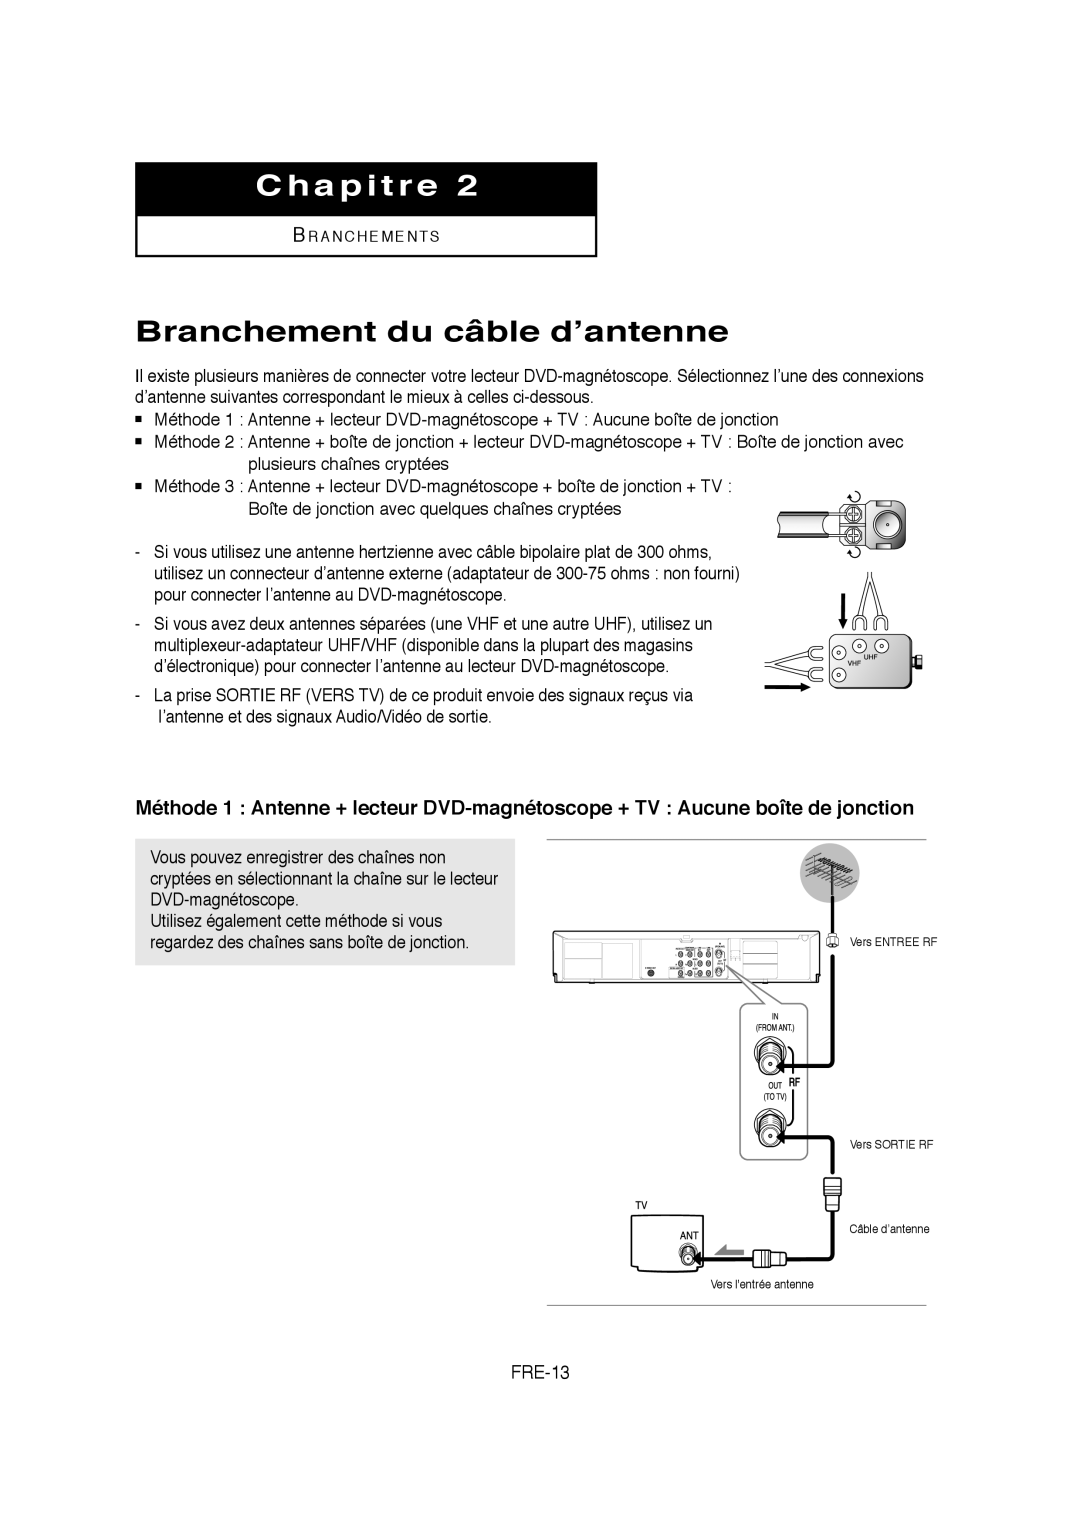 Samsung AK68-01304A, V6700-XAC, 20070205090323359 instruction manual Branchement du câble d’antenne, Chapitre, FRE-13 